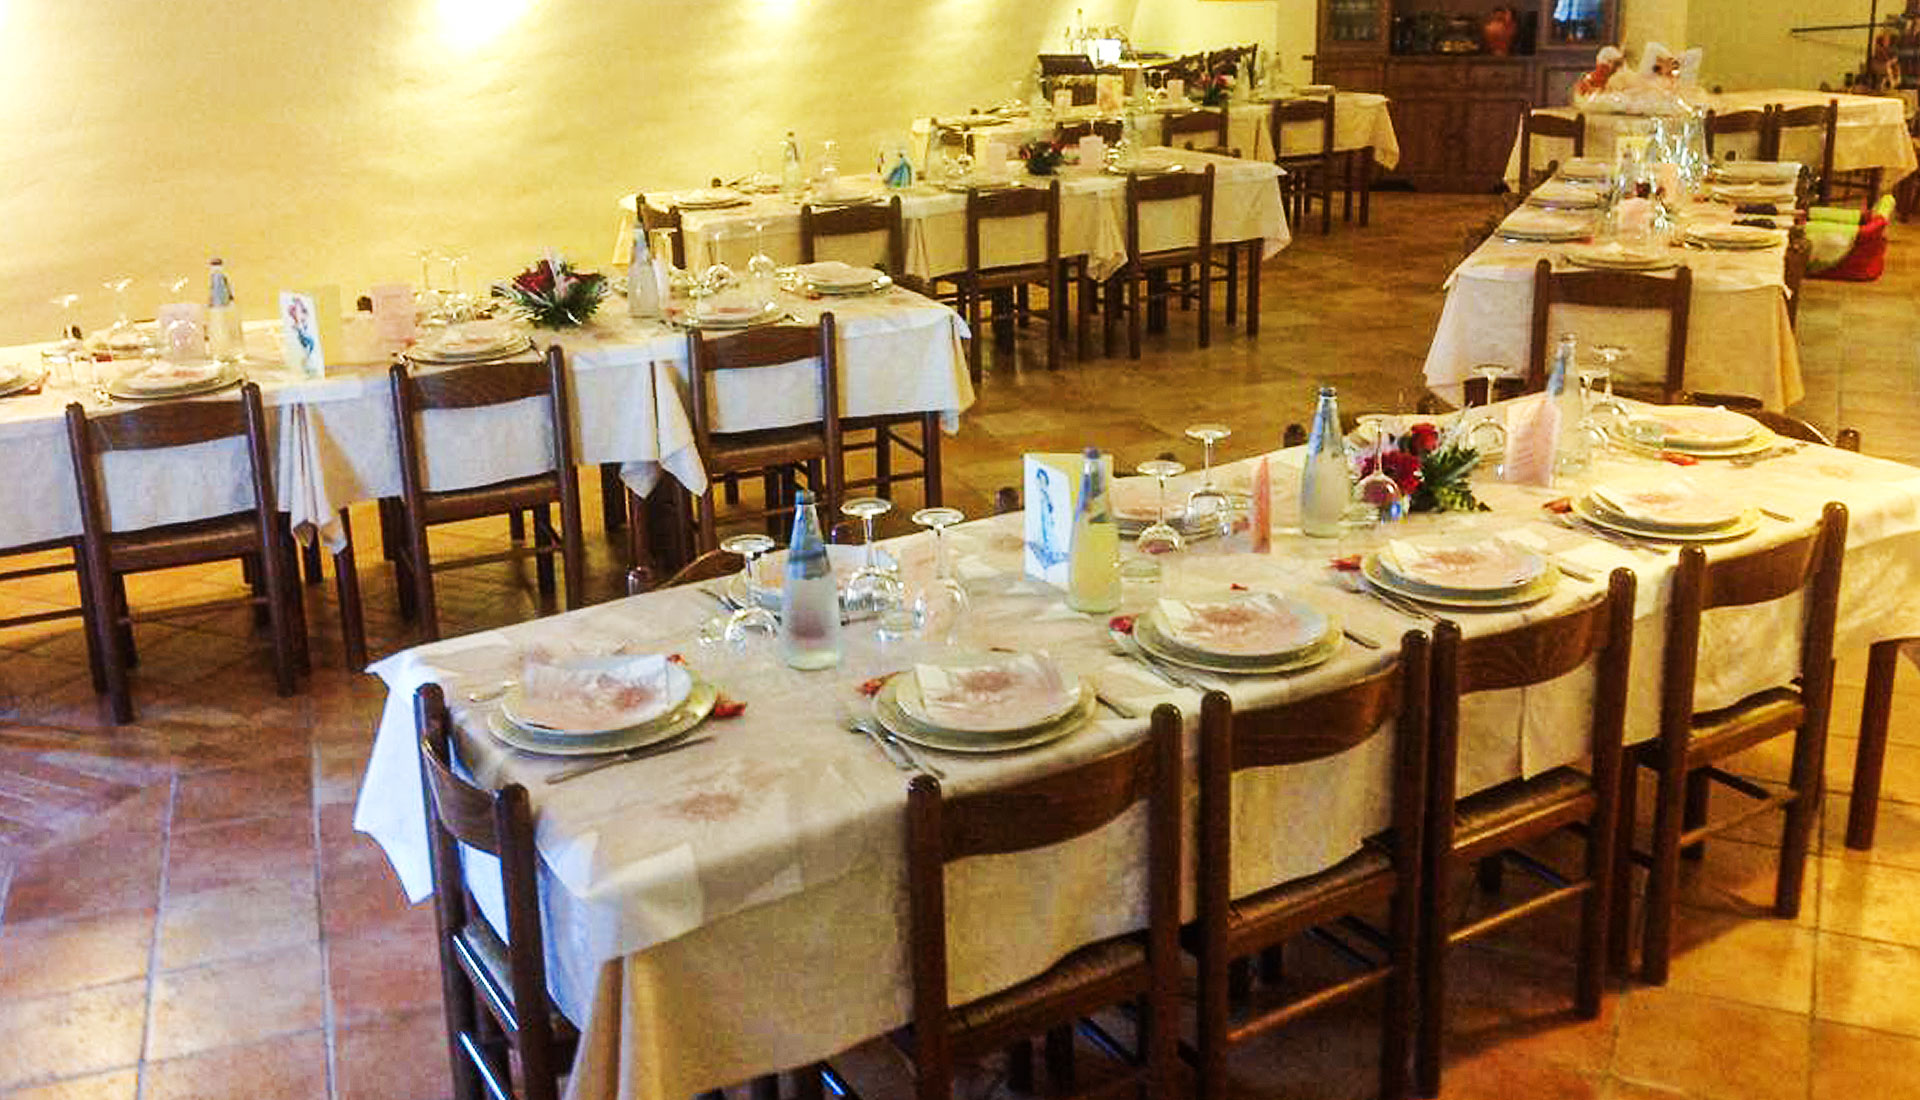 The Cavalluccio Marino restaurant - Grosseto, Italy